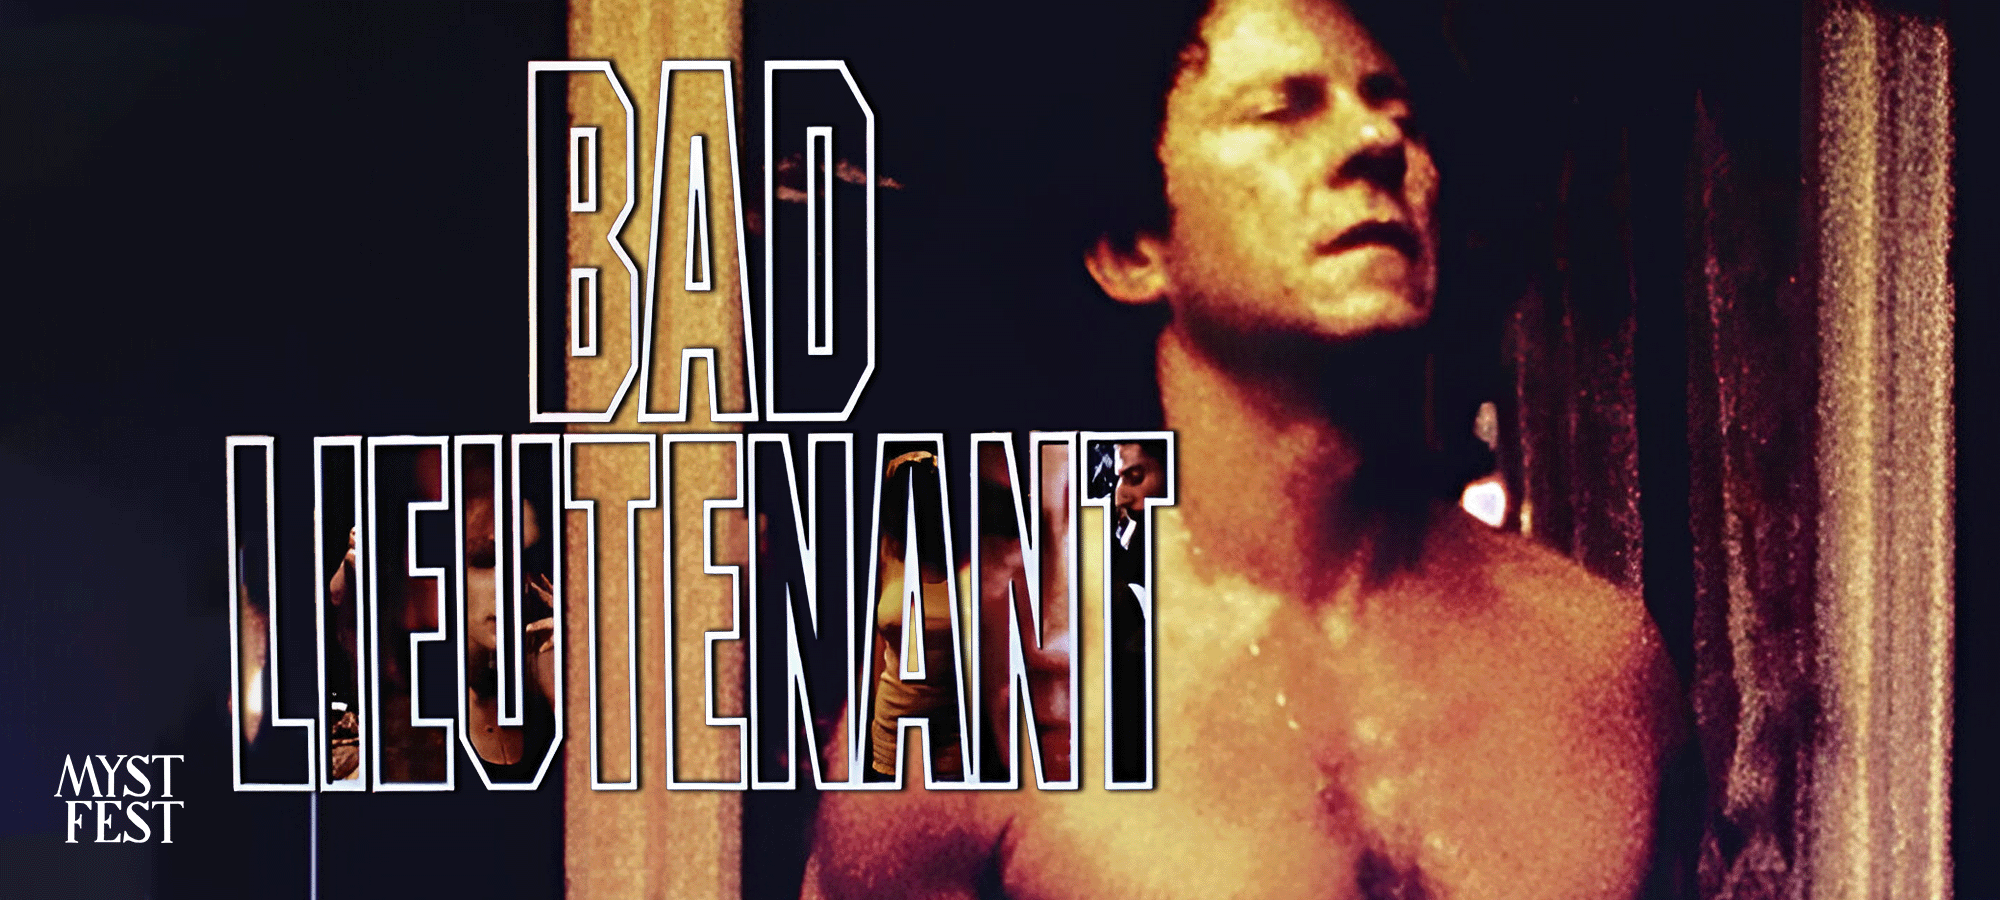 BAD LIEUTENANT - Il cattivo tenente (Abel Ferrara - USA, 1992)